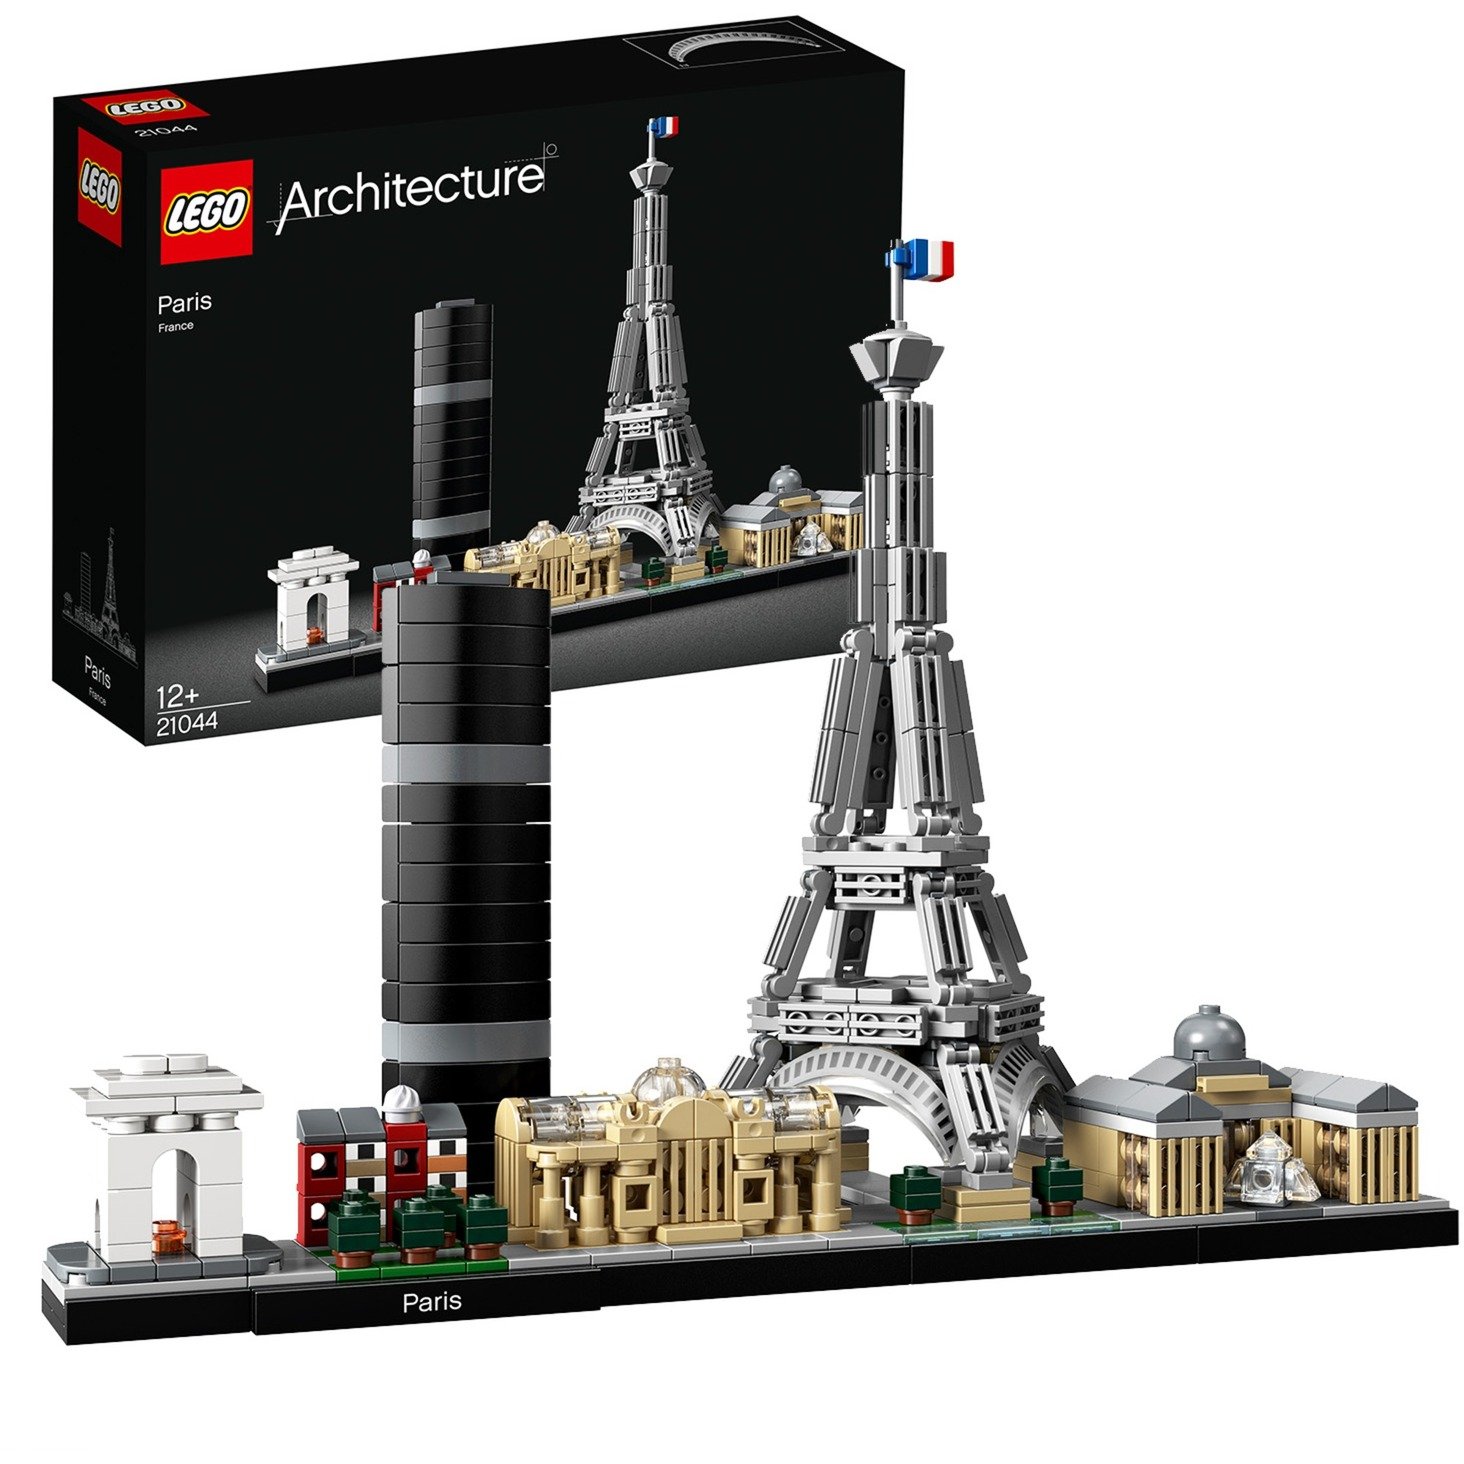 Spielzeug: Lego 21044 Architecture Paris